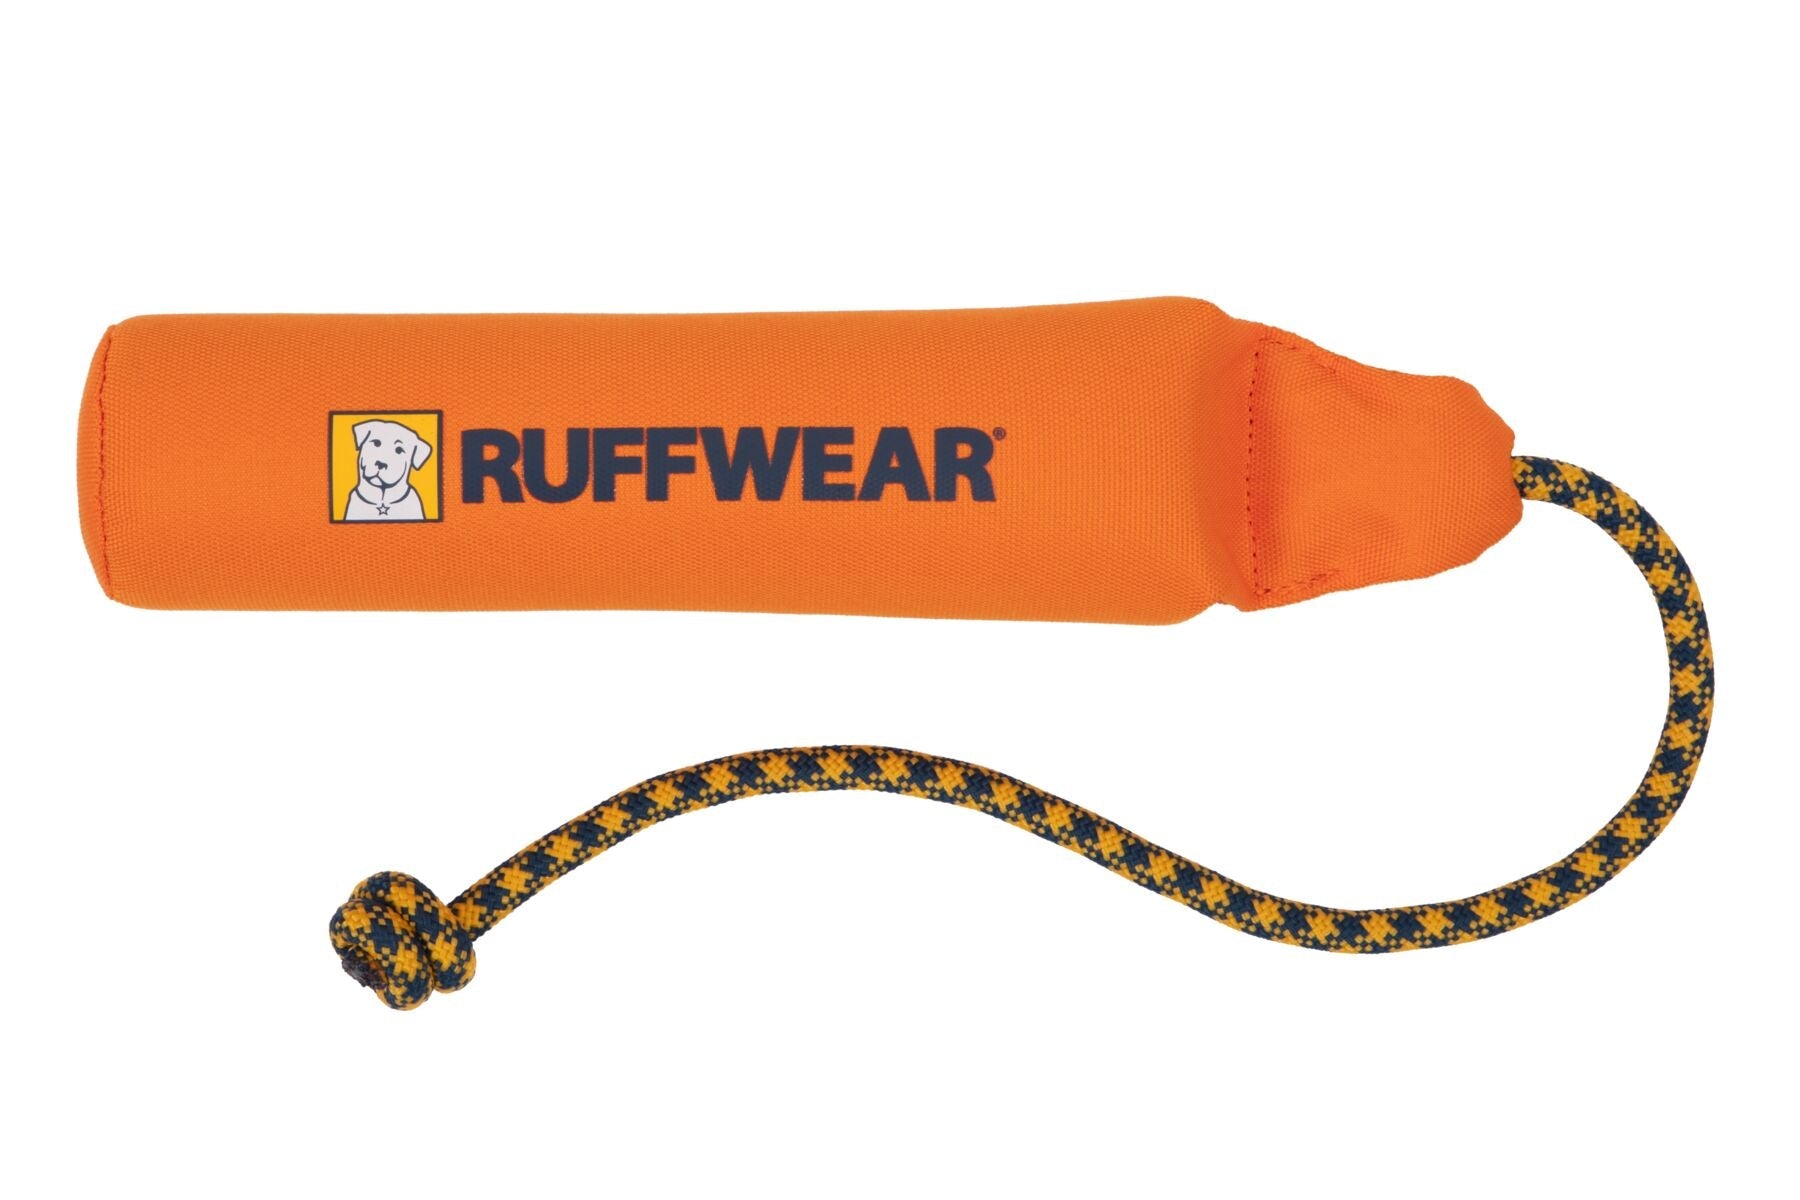 Lunker® Juguete de Espuma para Jugar en el Agua - en Naranja (Campfire Orange) Ruffwear®